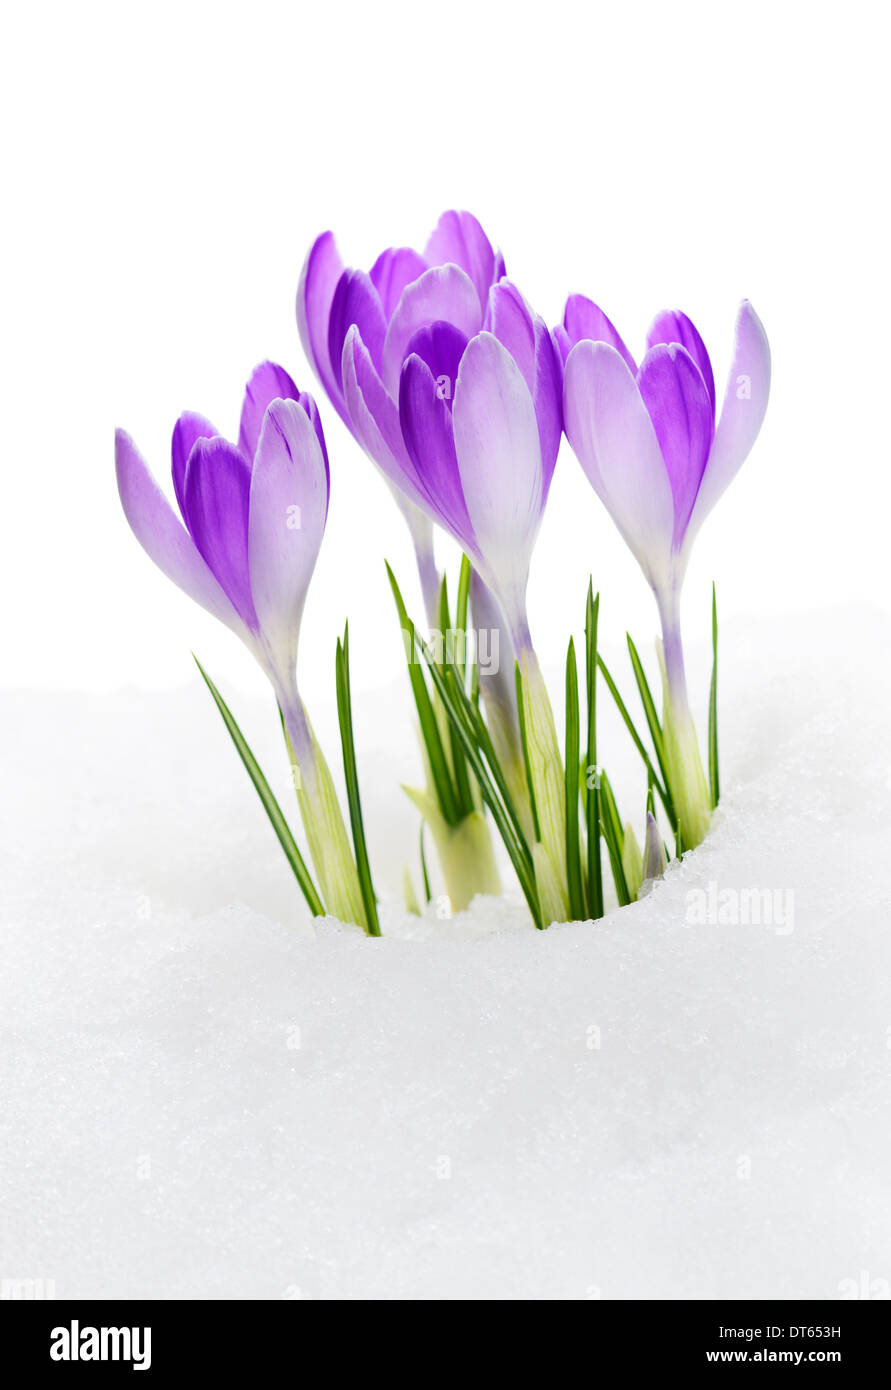 Purple Crocuses Vanguard, flowering amid thawing snow Stock Photo